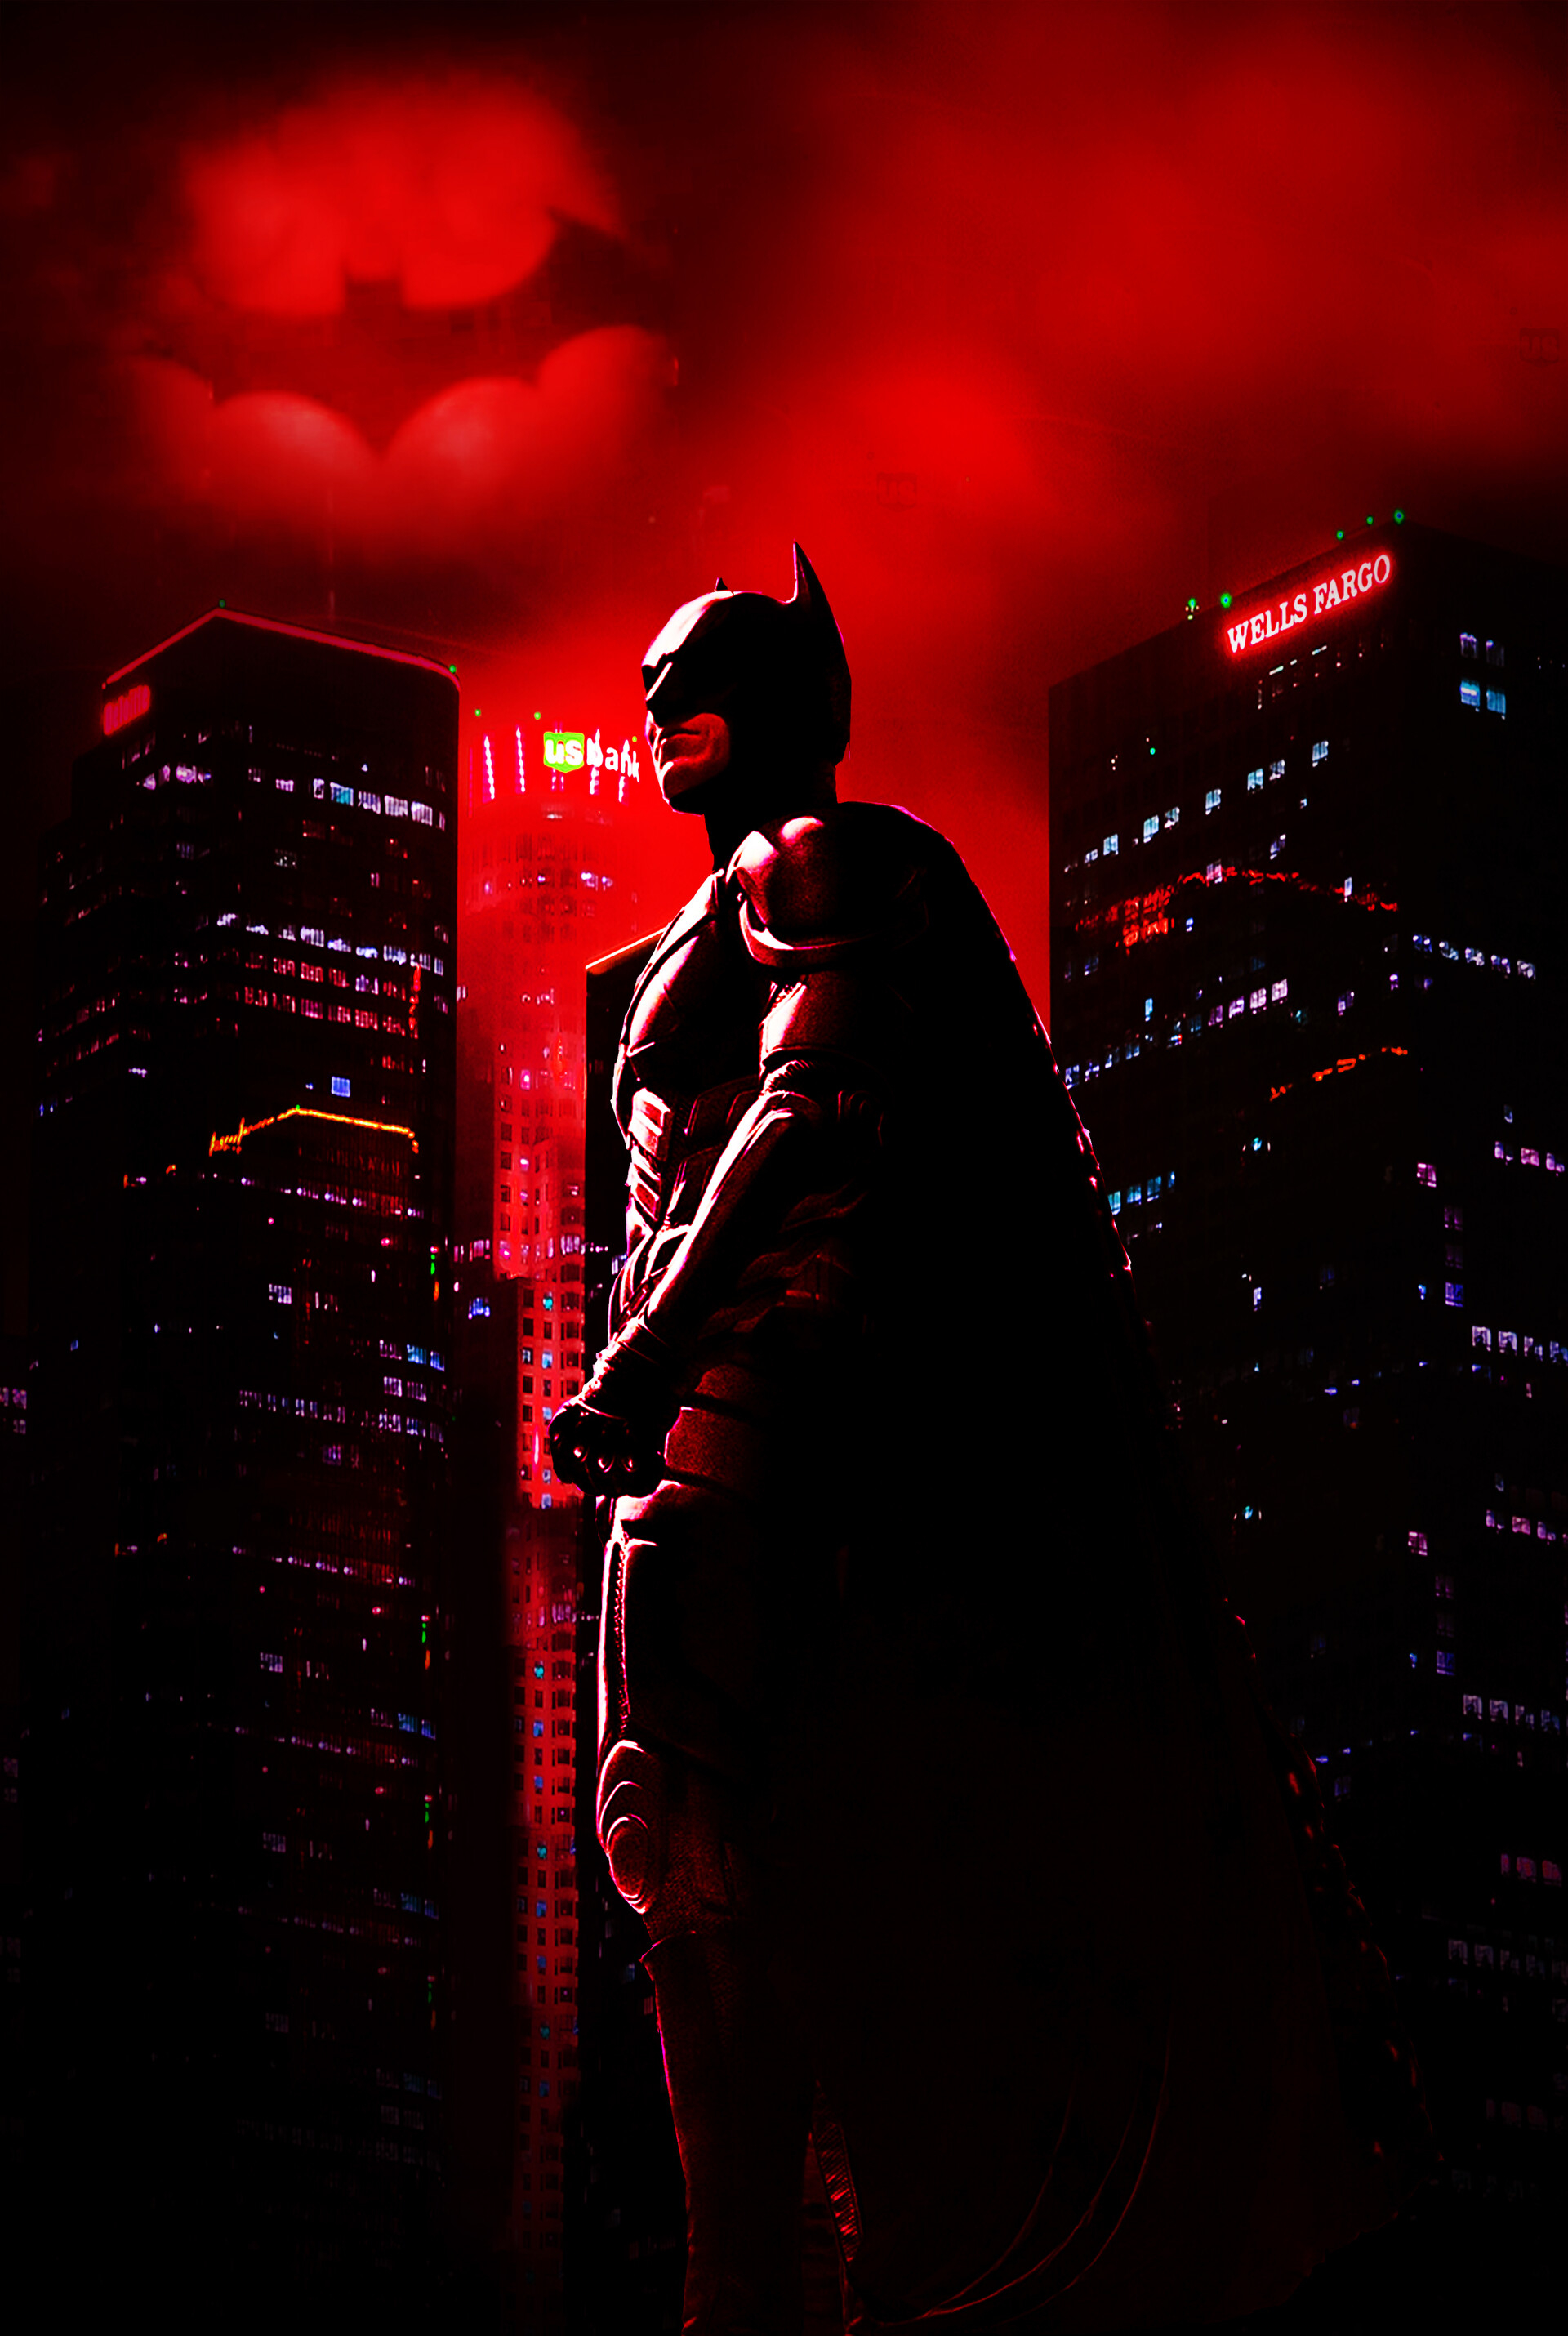 Batman City Art Wallpaper, HD Superheroes 4K Wallpapers, Images, Photos and  Background - Wallpapers Den